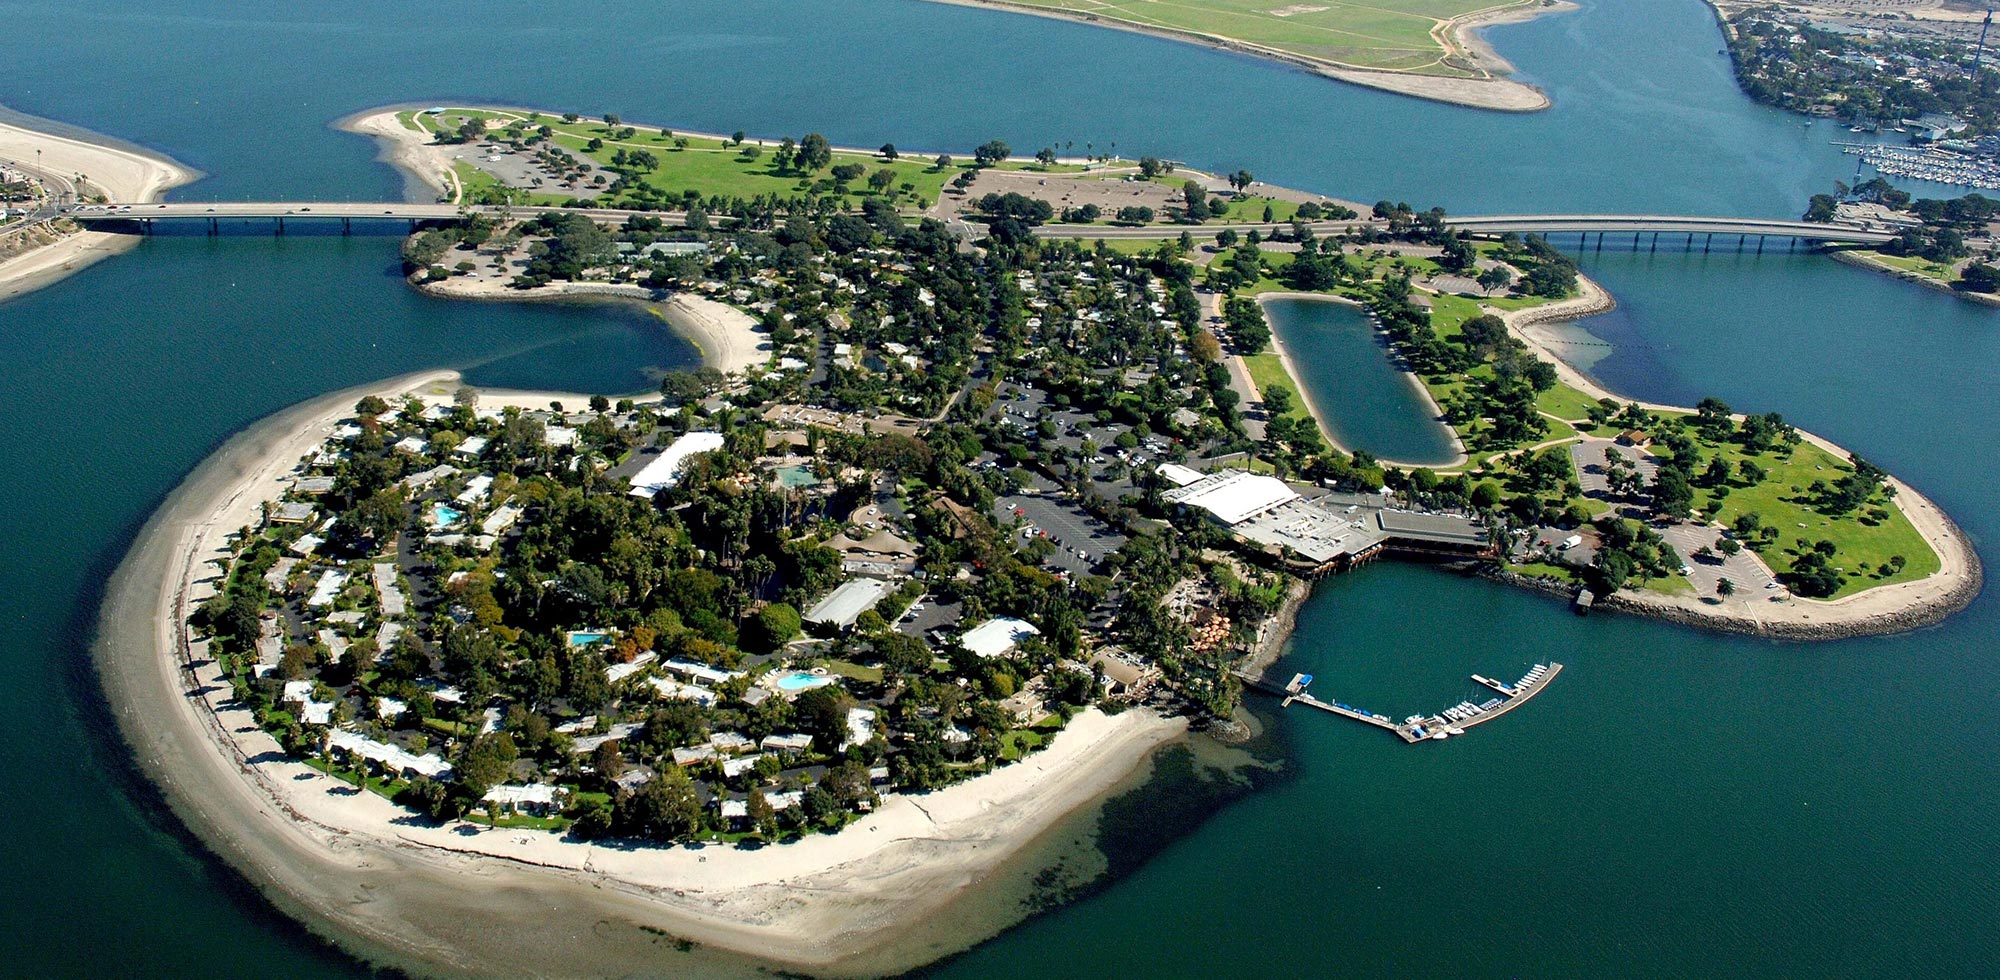 Beach Resort Hotels In San Diego  Paradise Point Resort - Resort Hotels in  San Diego